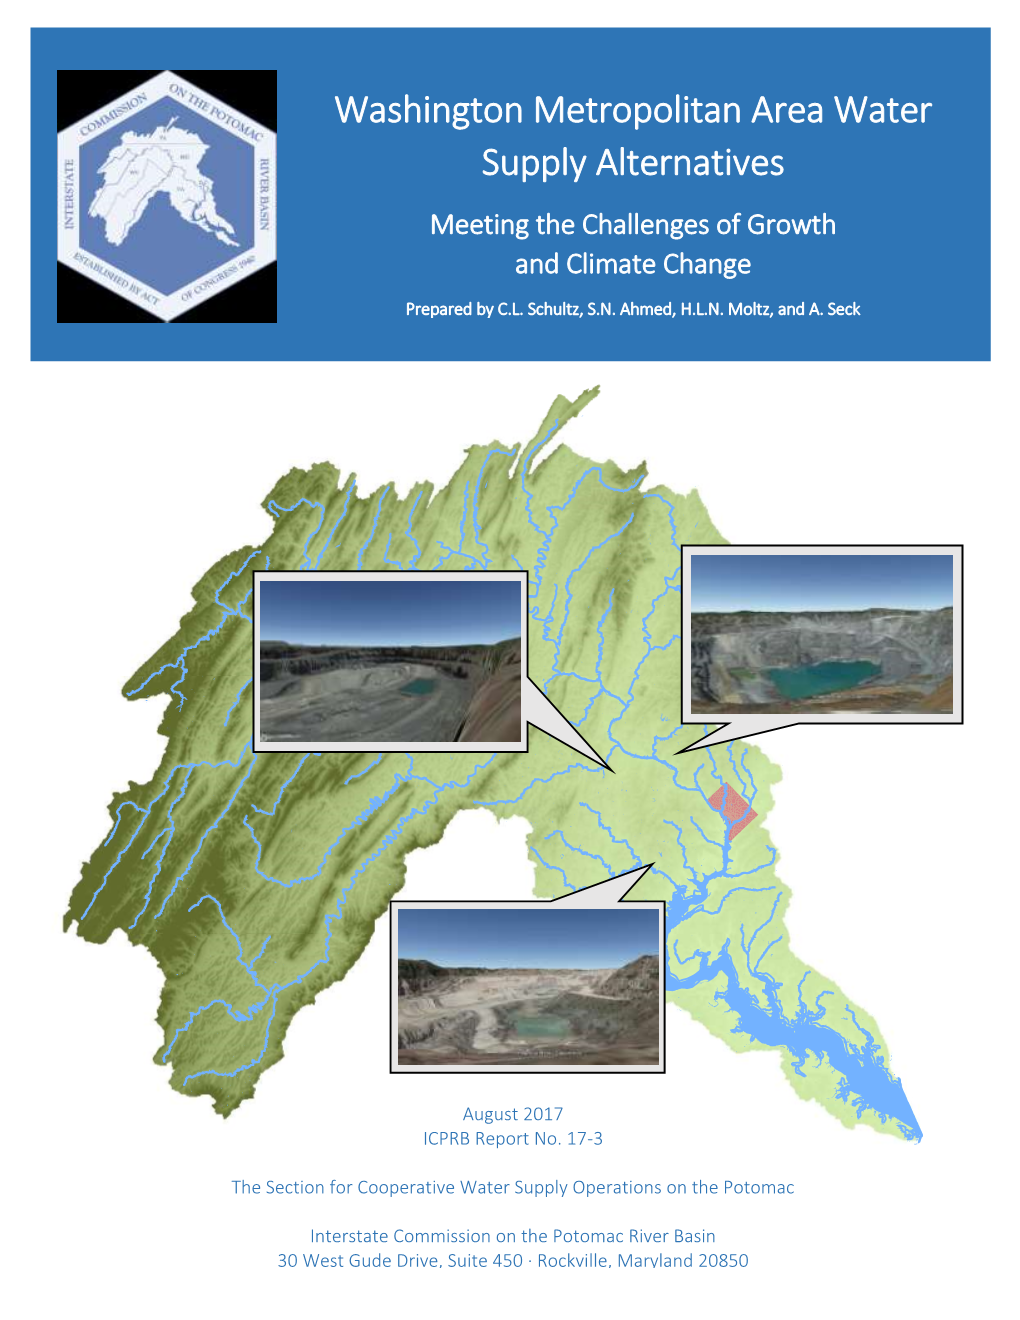 Washington Metropolitan Area Water Supply Alternatives